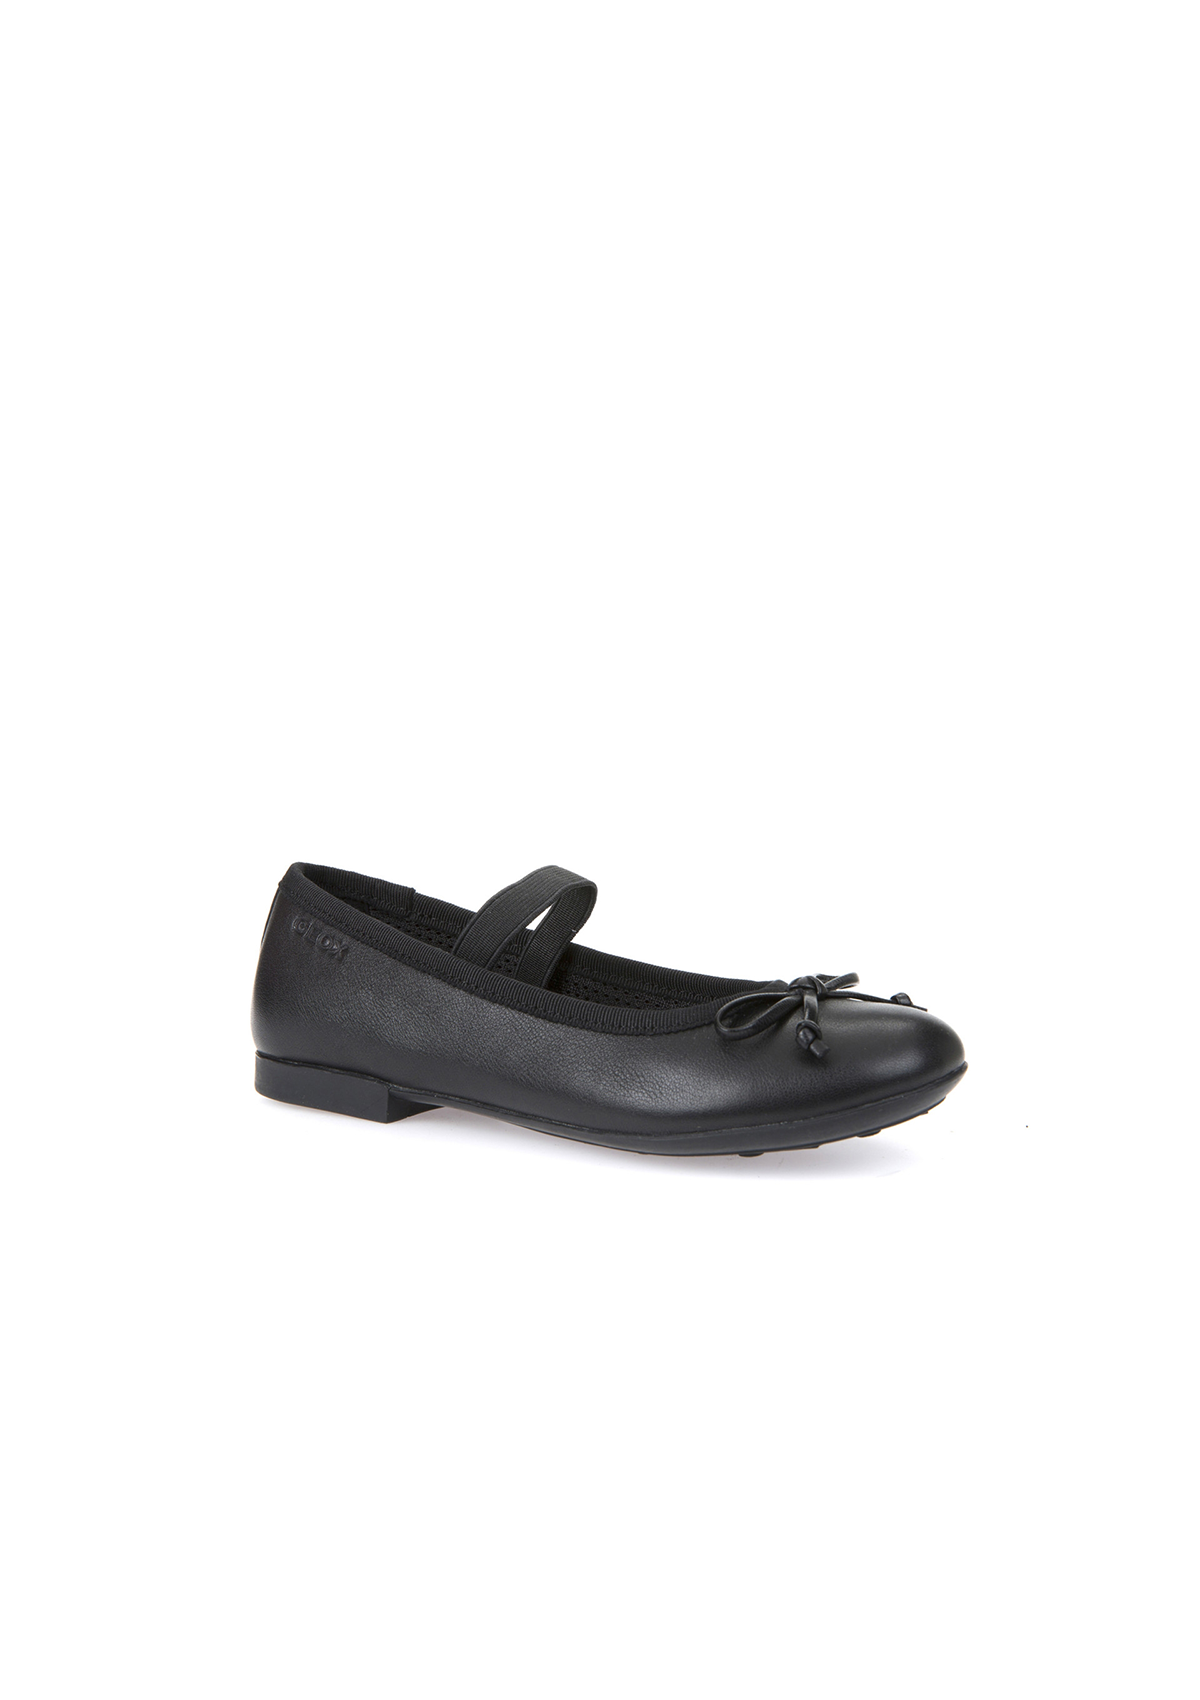 Geox Girls School Shoes PLIE Black Leather